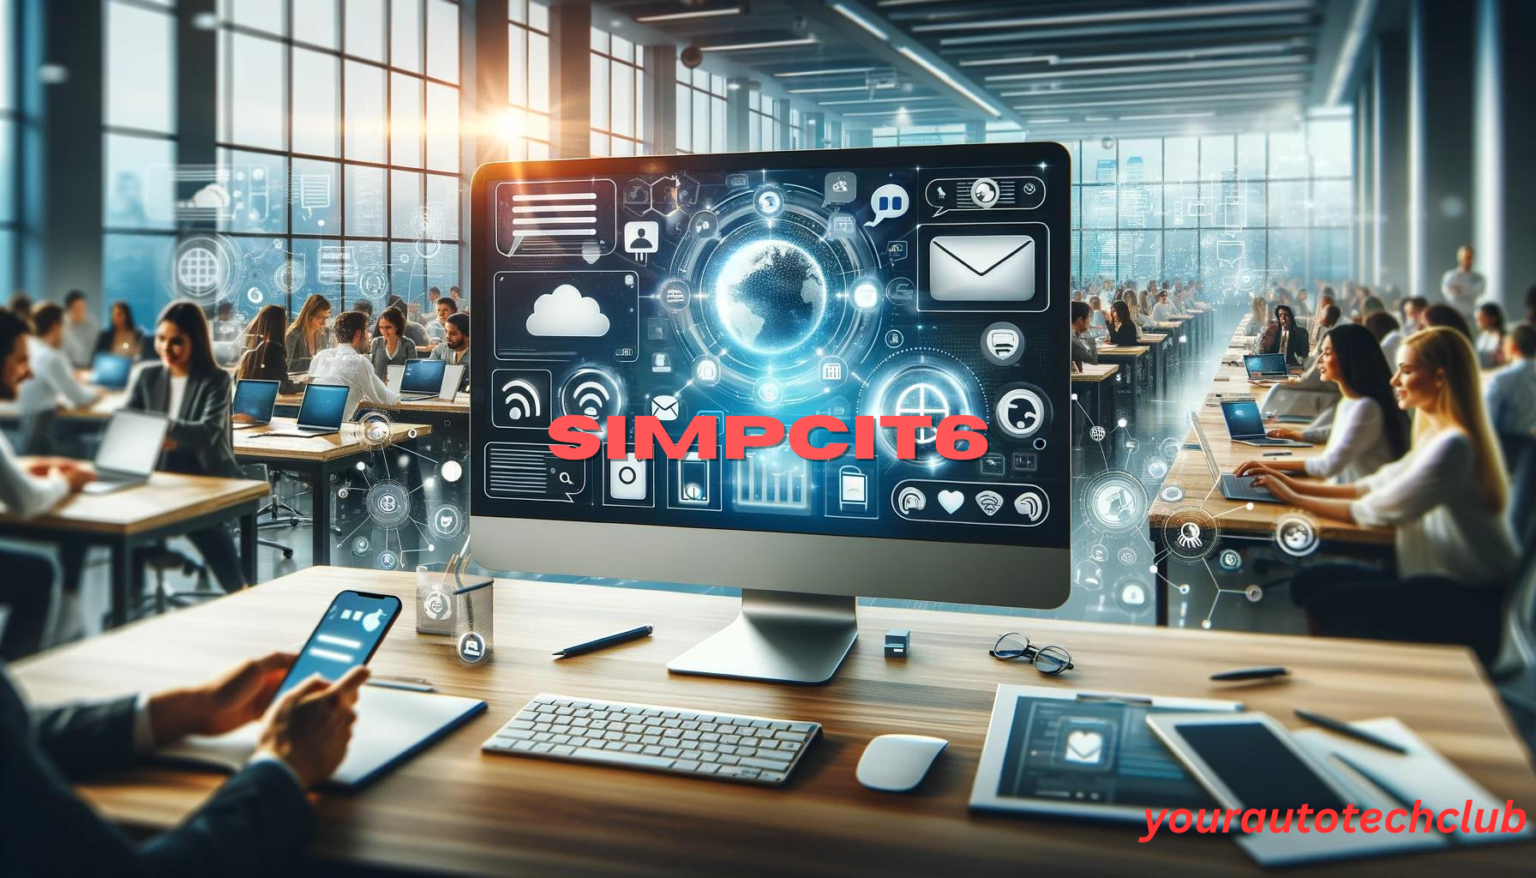 Introducing Simpcit6: A New Era in Digital Communication